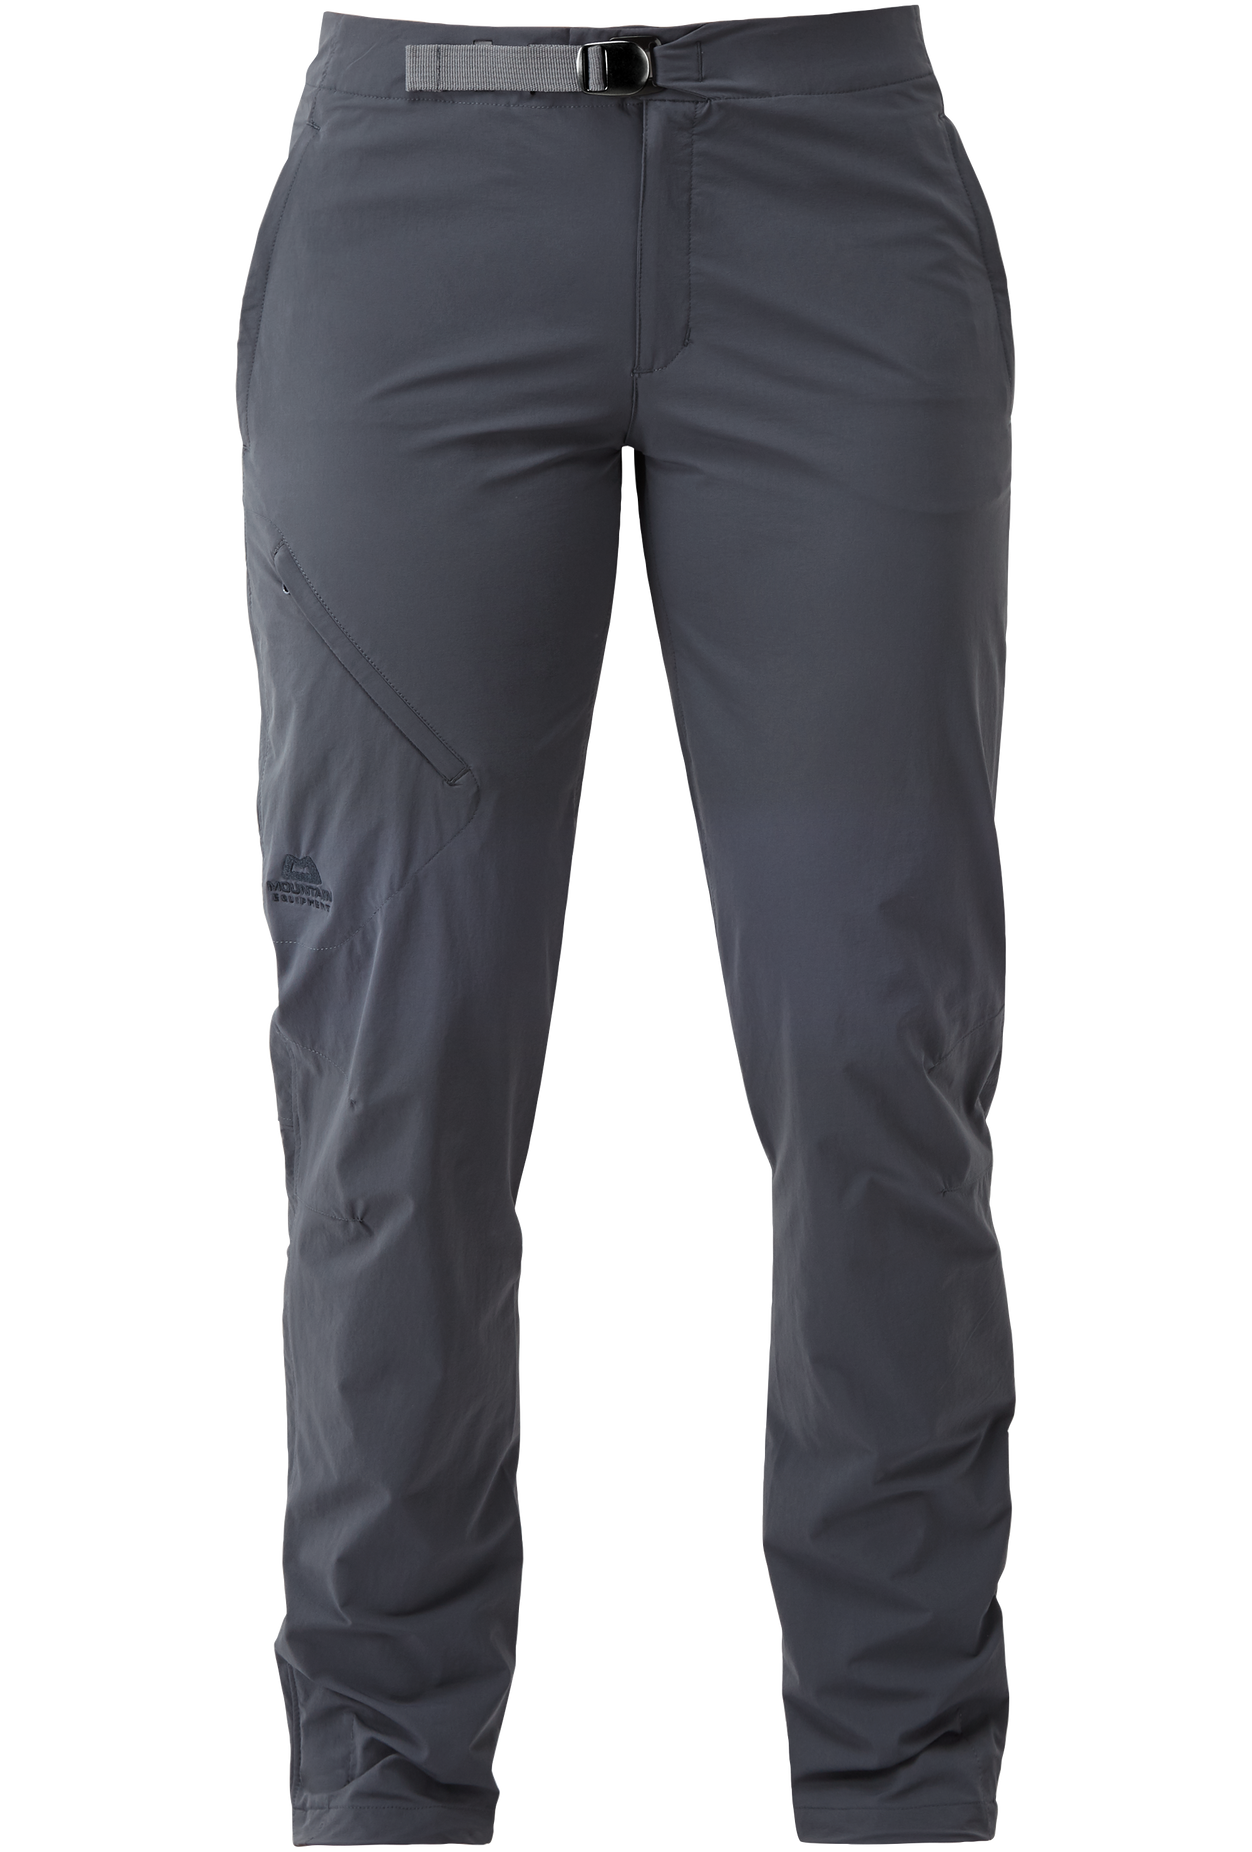 Mountain Equipment dámské softshellové kalhoty Comici Wmns Pant - zkrácené Barva: Ombre Blue, Velikost: 10/S